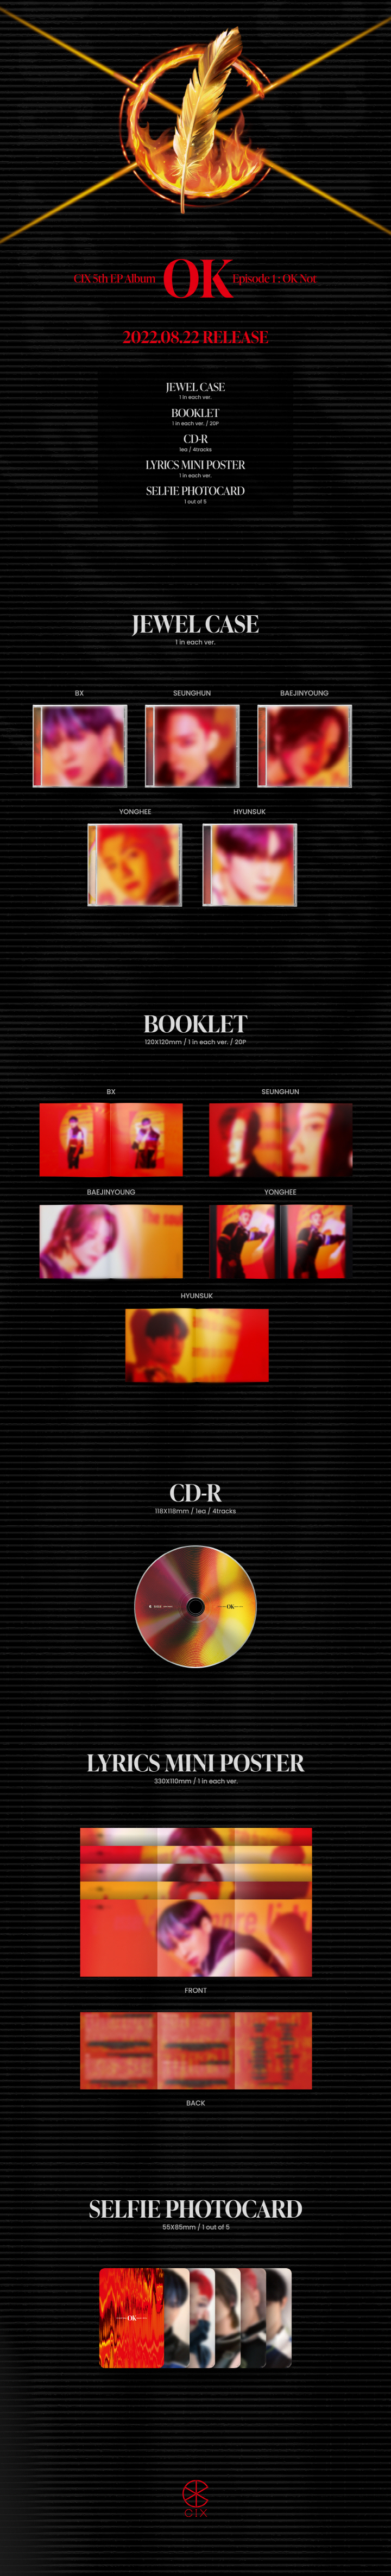 CIX - 5th EP ALBUM [OK Episode 1 OK Not] Baejinyoung ver